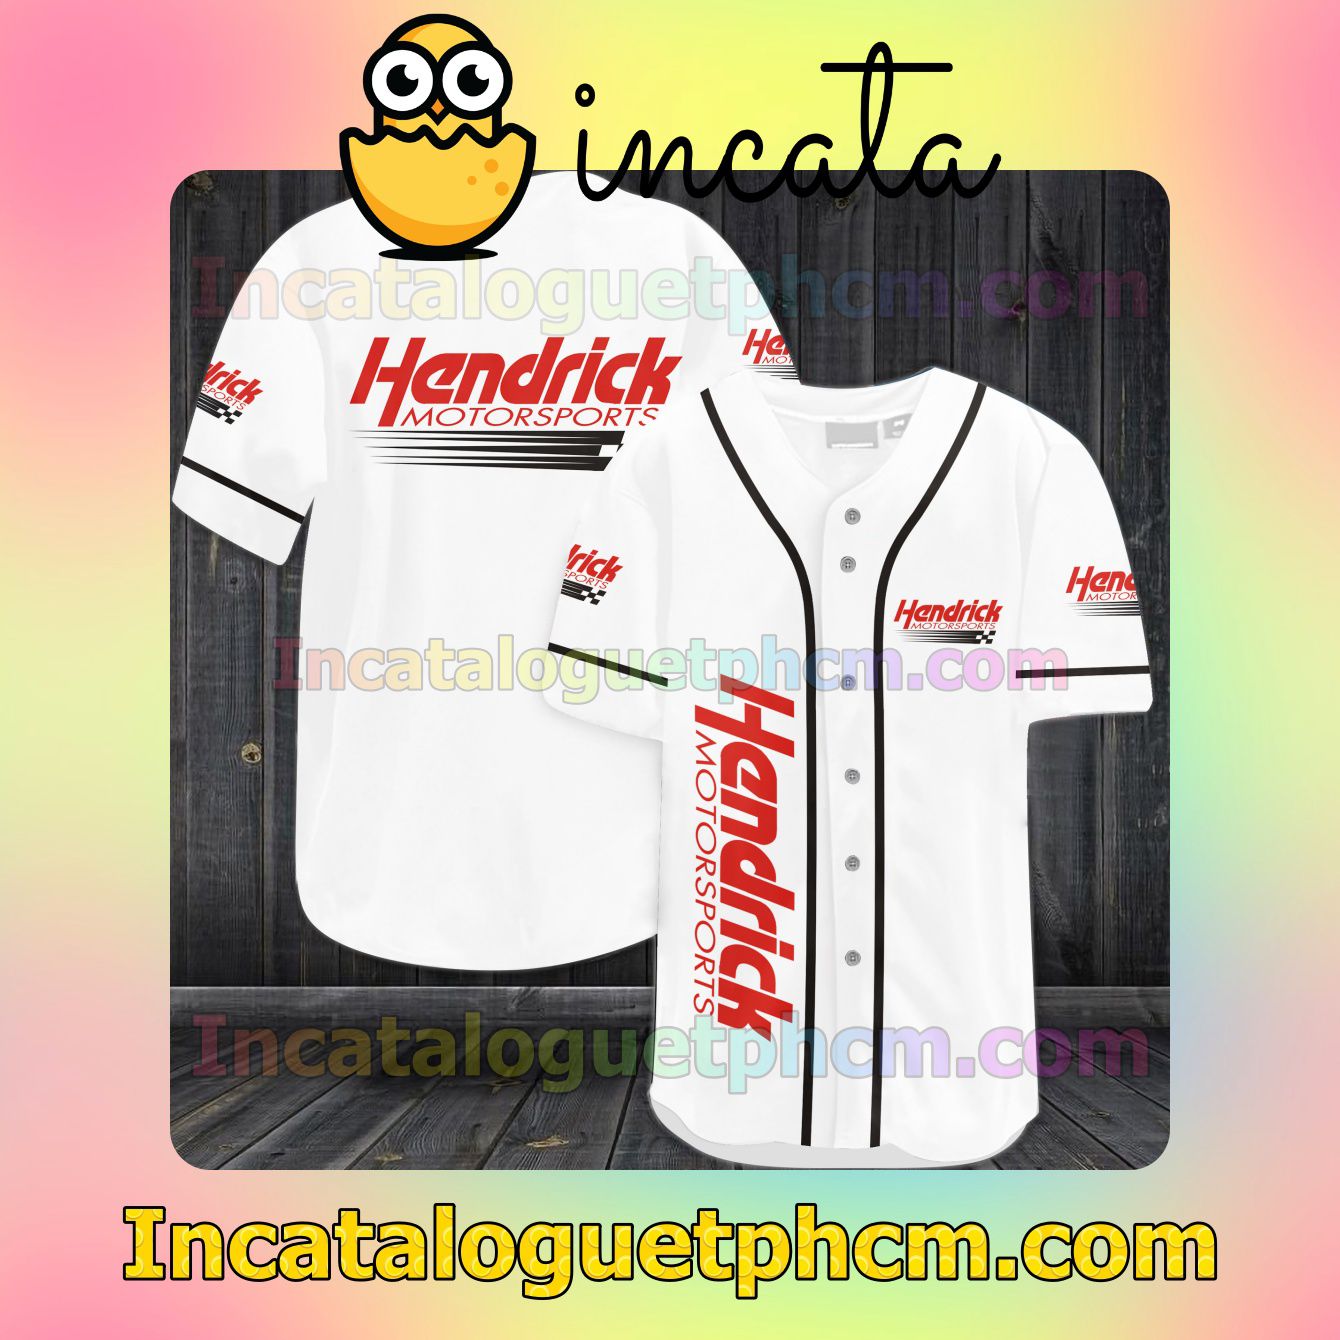 Hendrick Motorsports Car Team Baseball Jersey Shirt